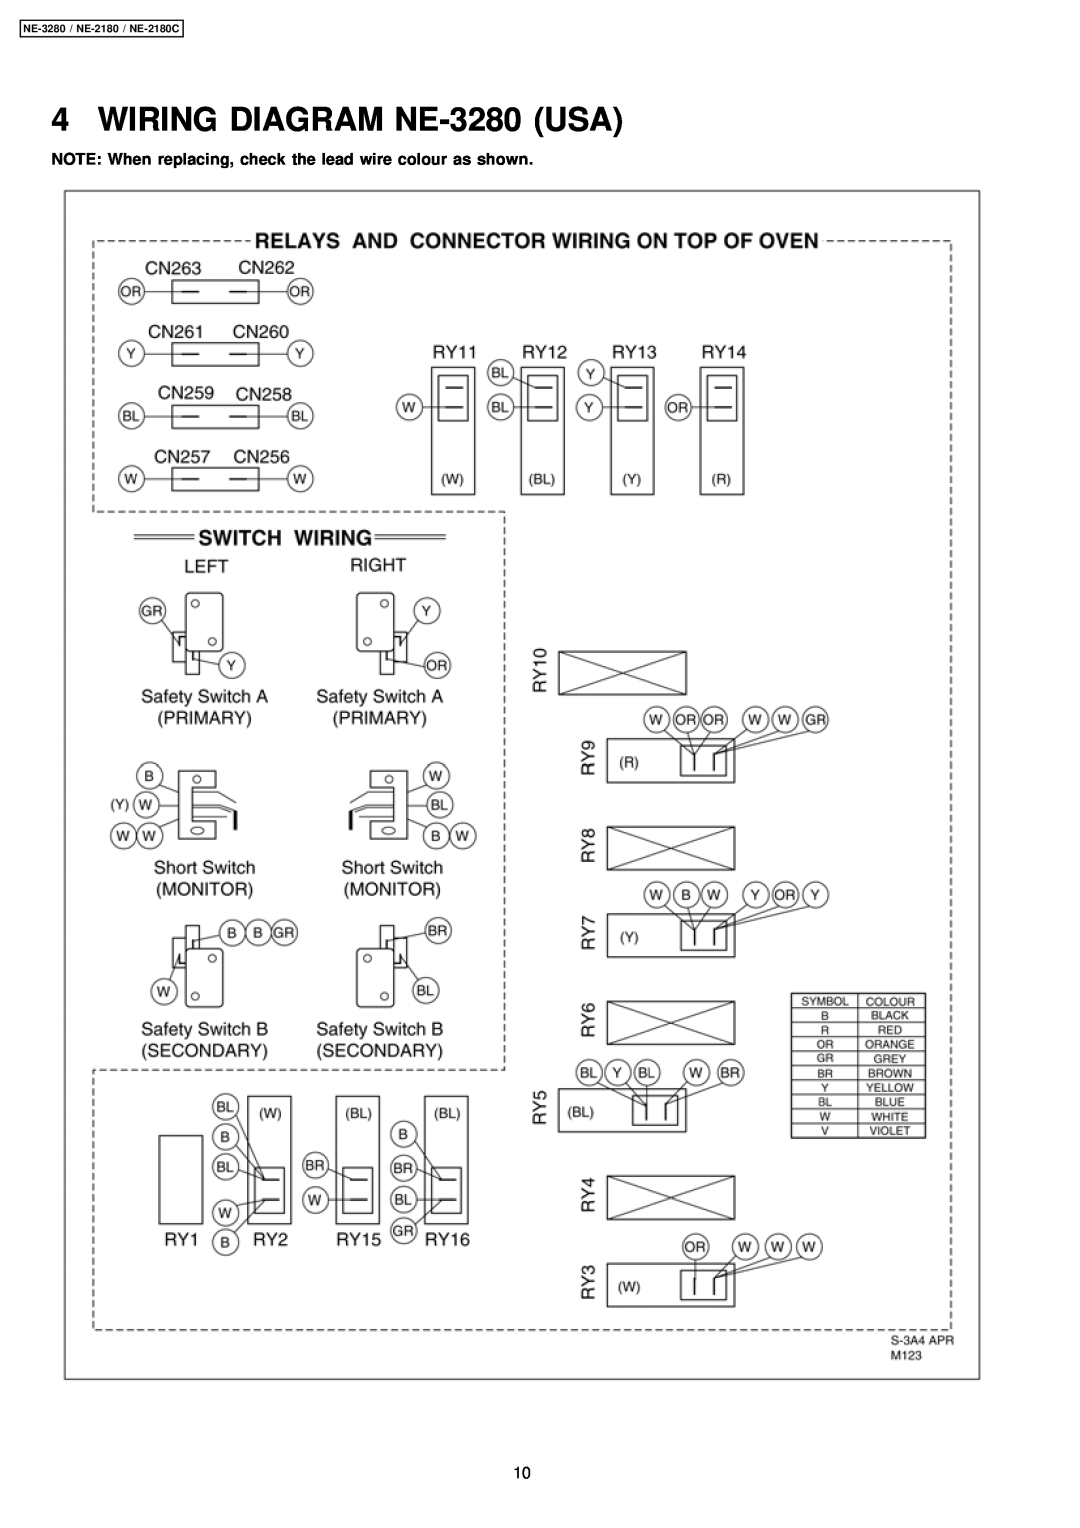 Panasonic manual WIRING DIAGRAM NE-3280USA, NE-3280 / NE-2180 / NE-2180C 